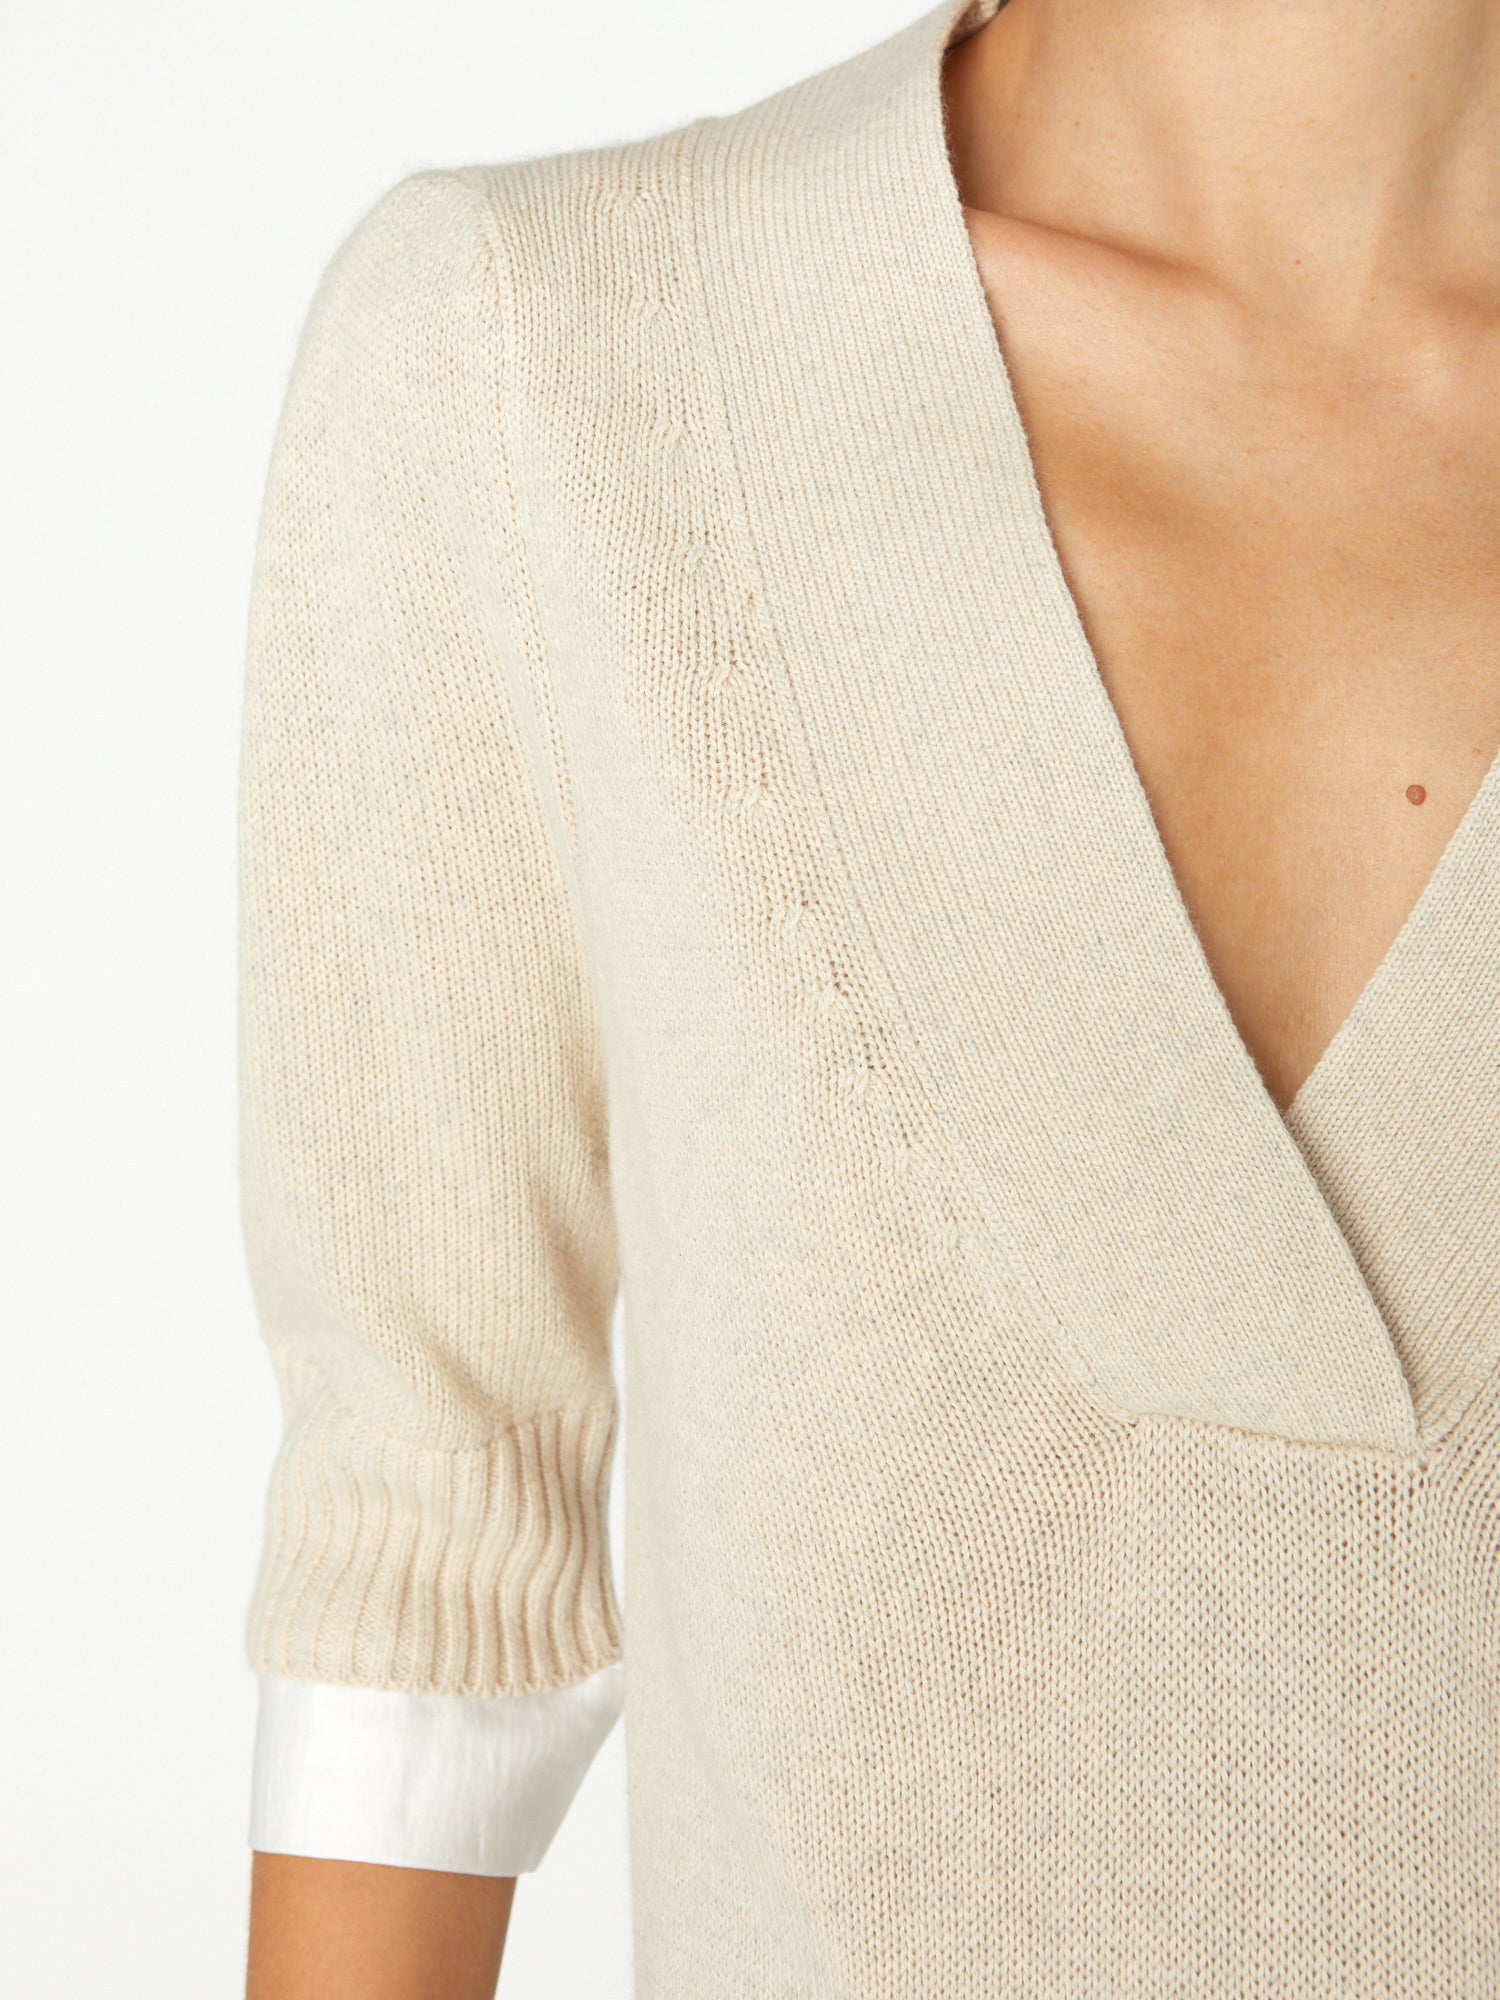 Lucie layered three-quarter sleeve v-neck sweater close up 2